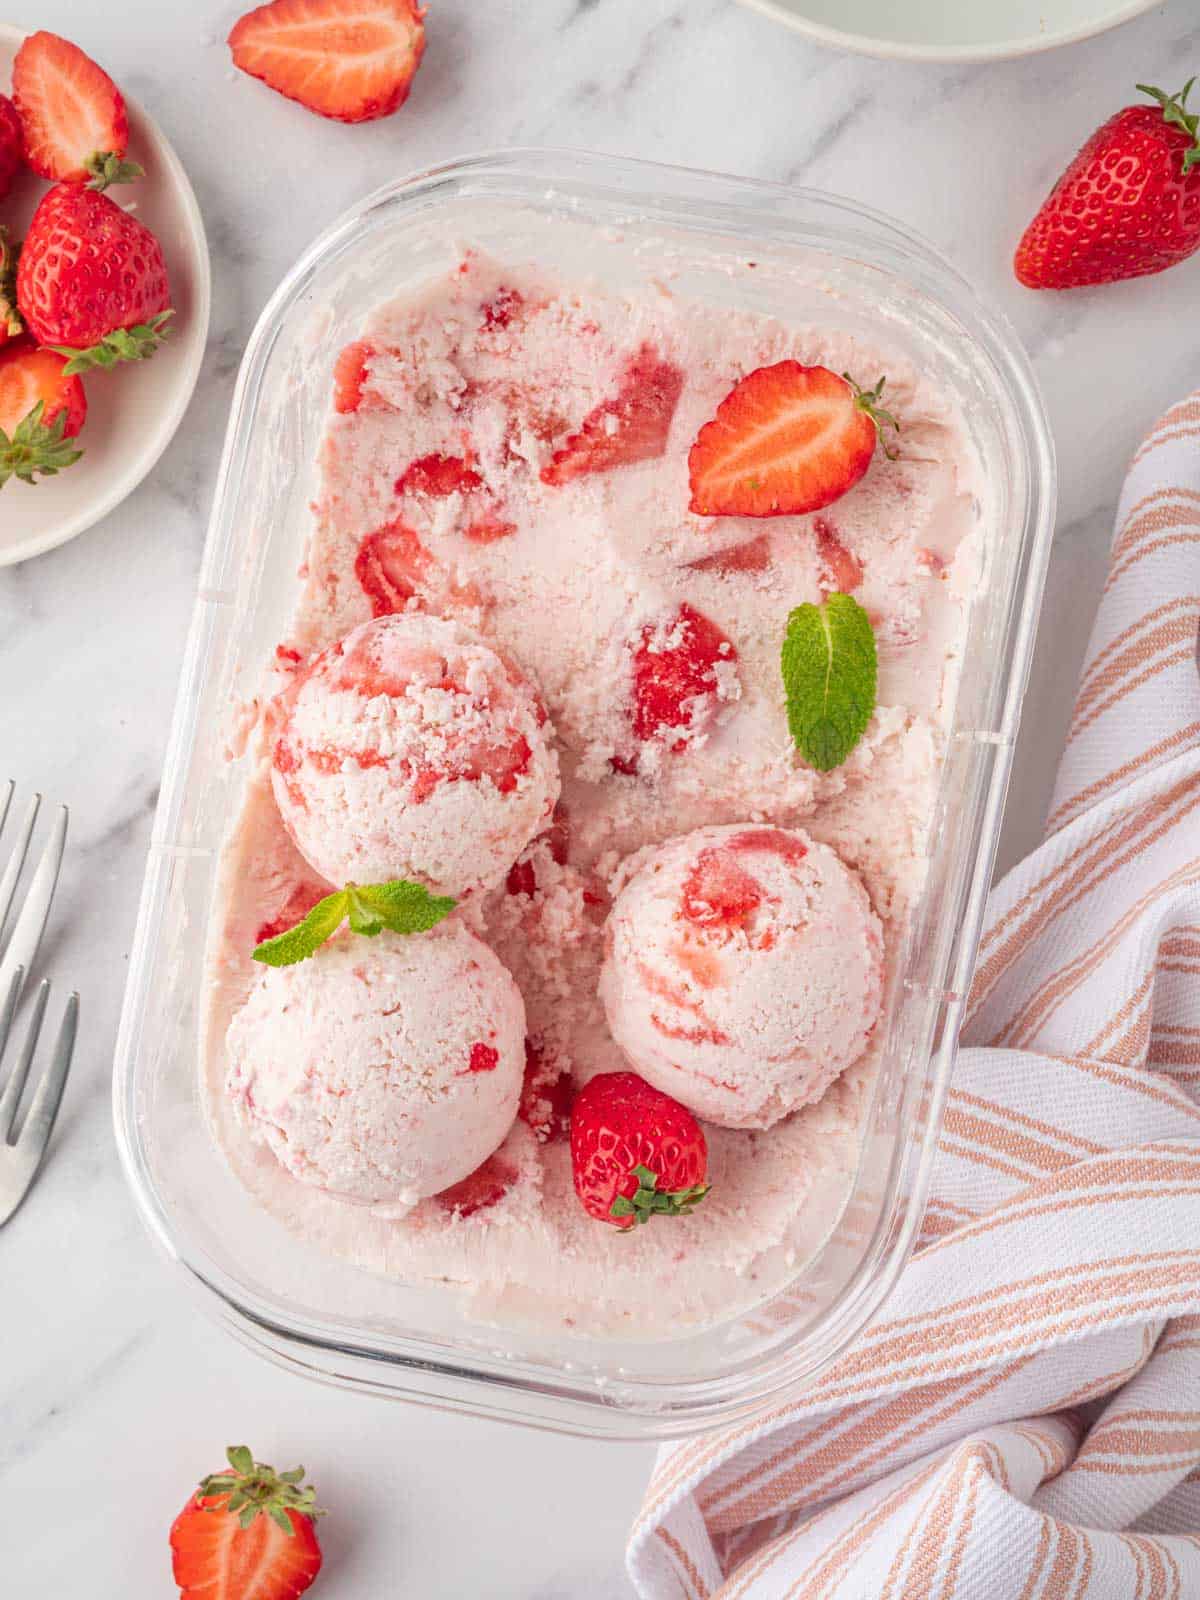 Strawberry ice cream in a container.